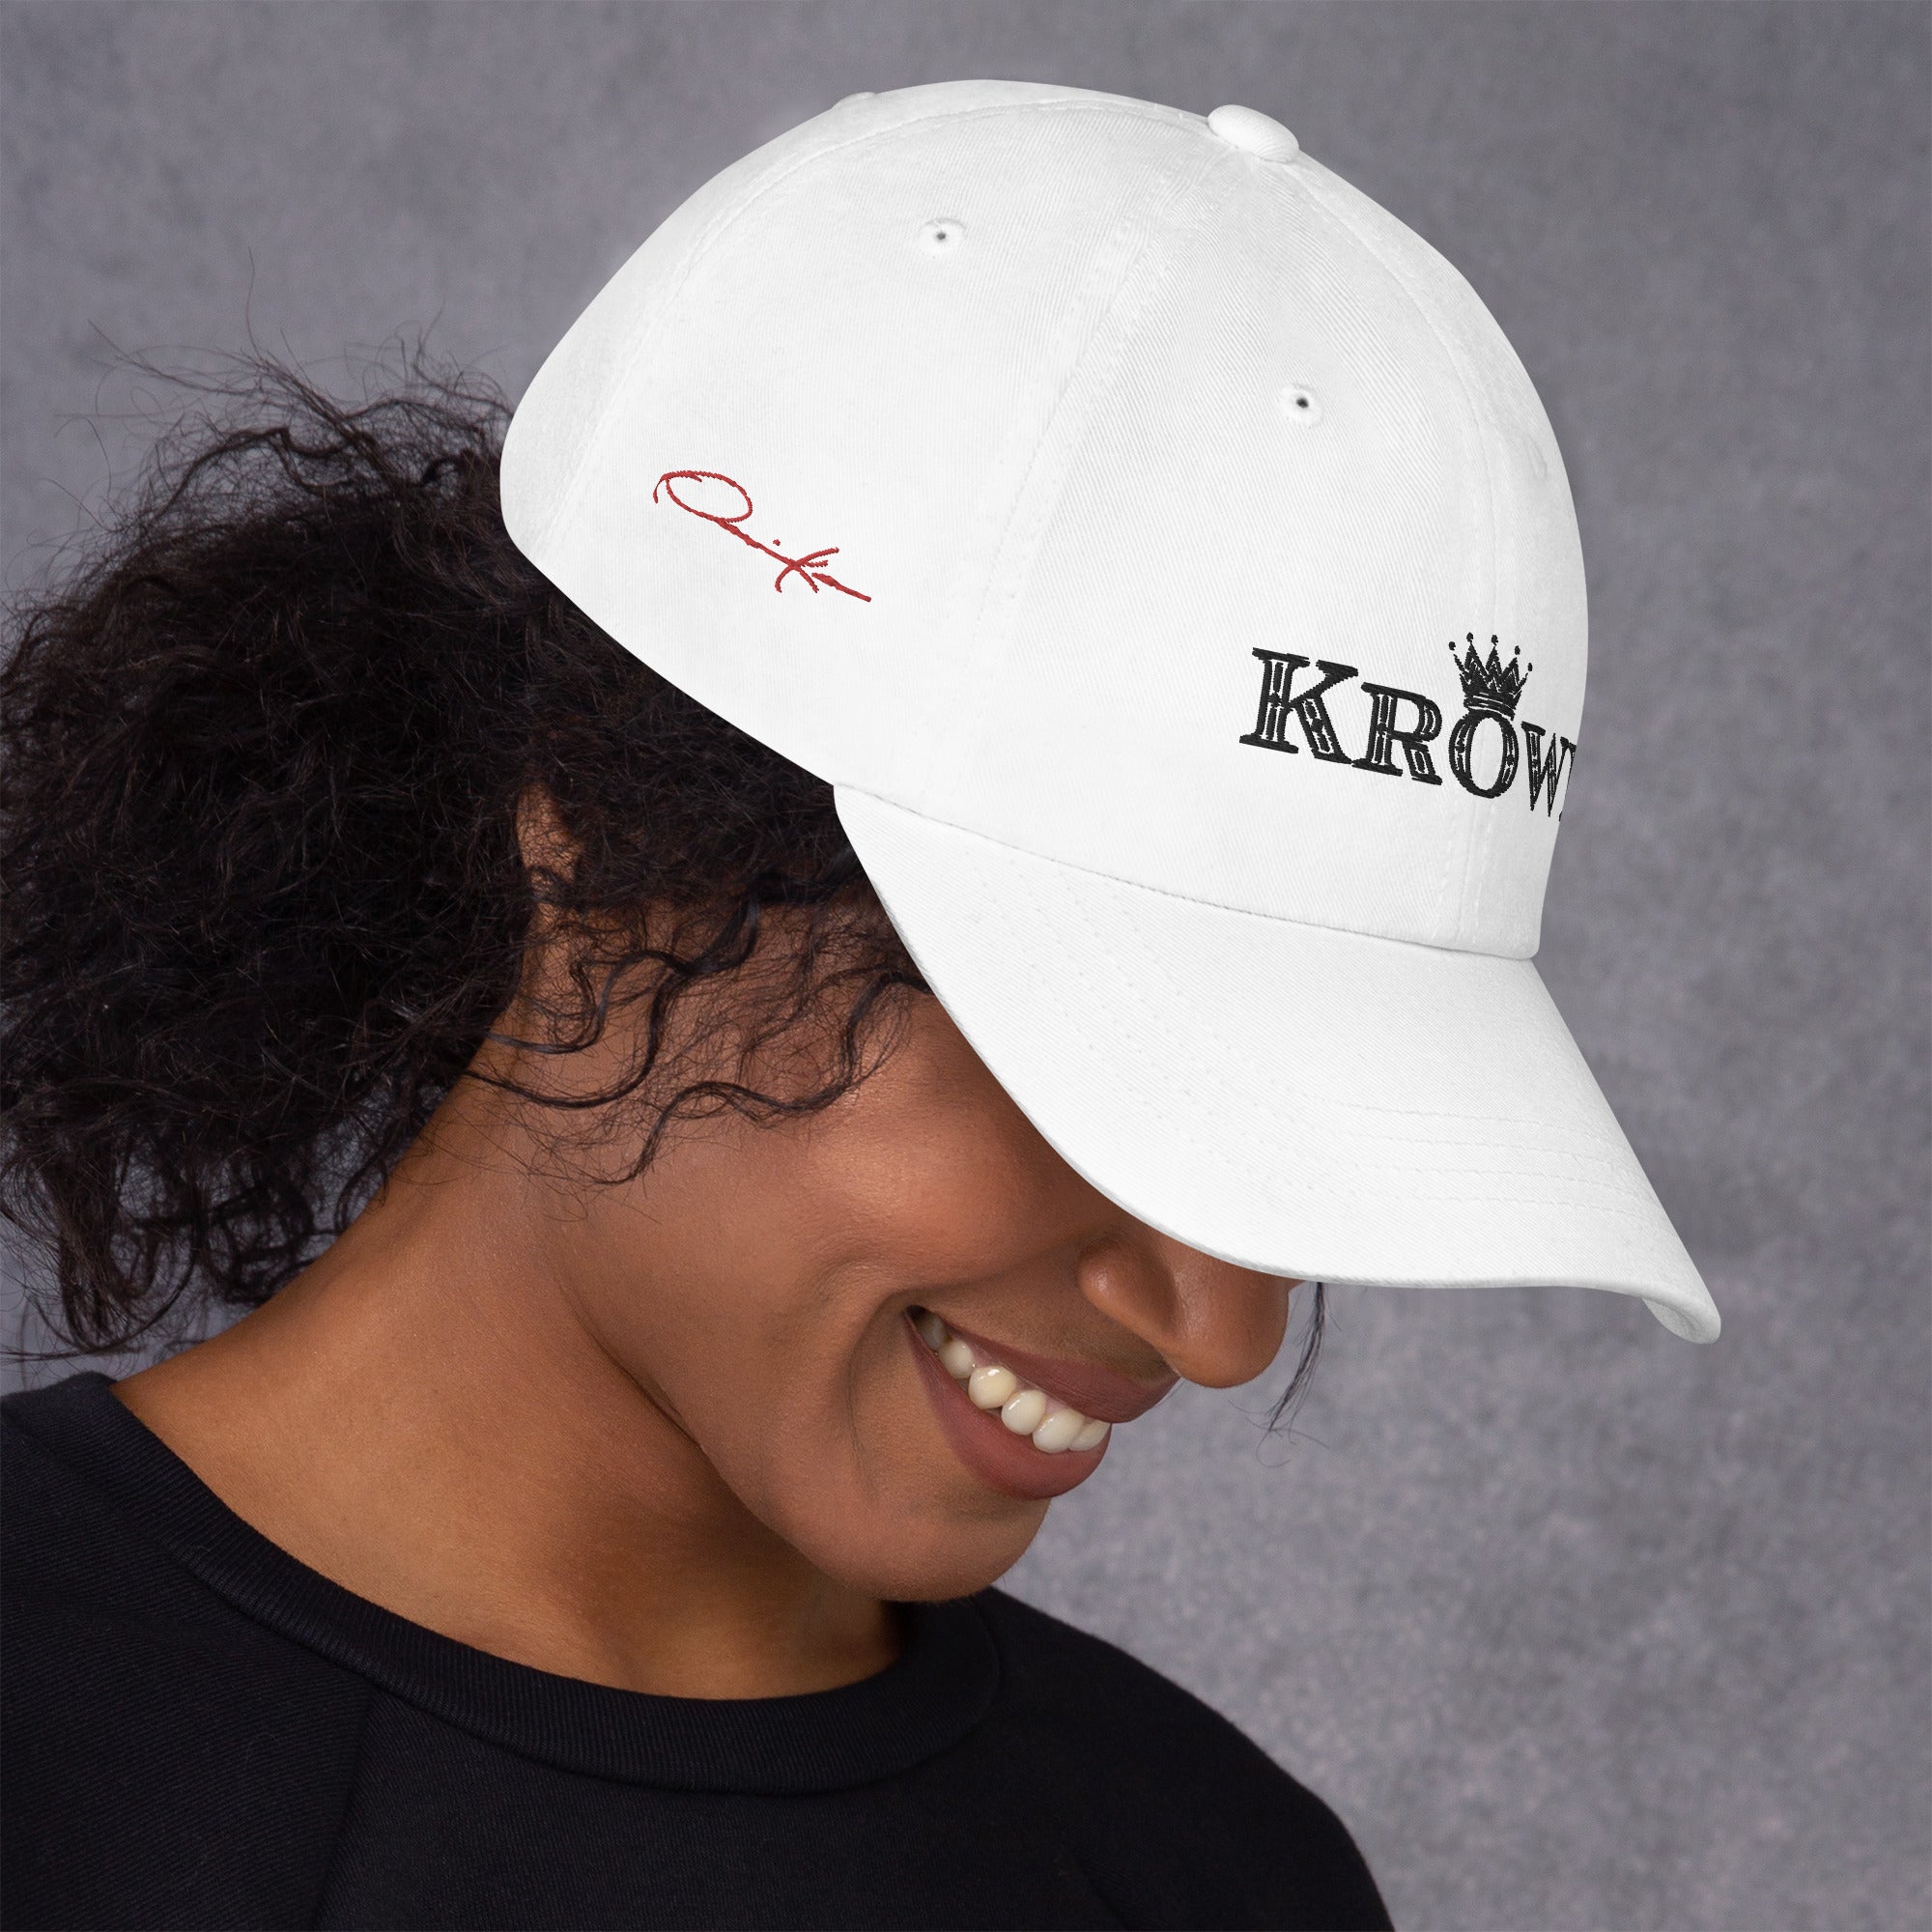 women's white embroidered baseball cap